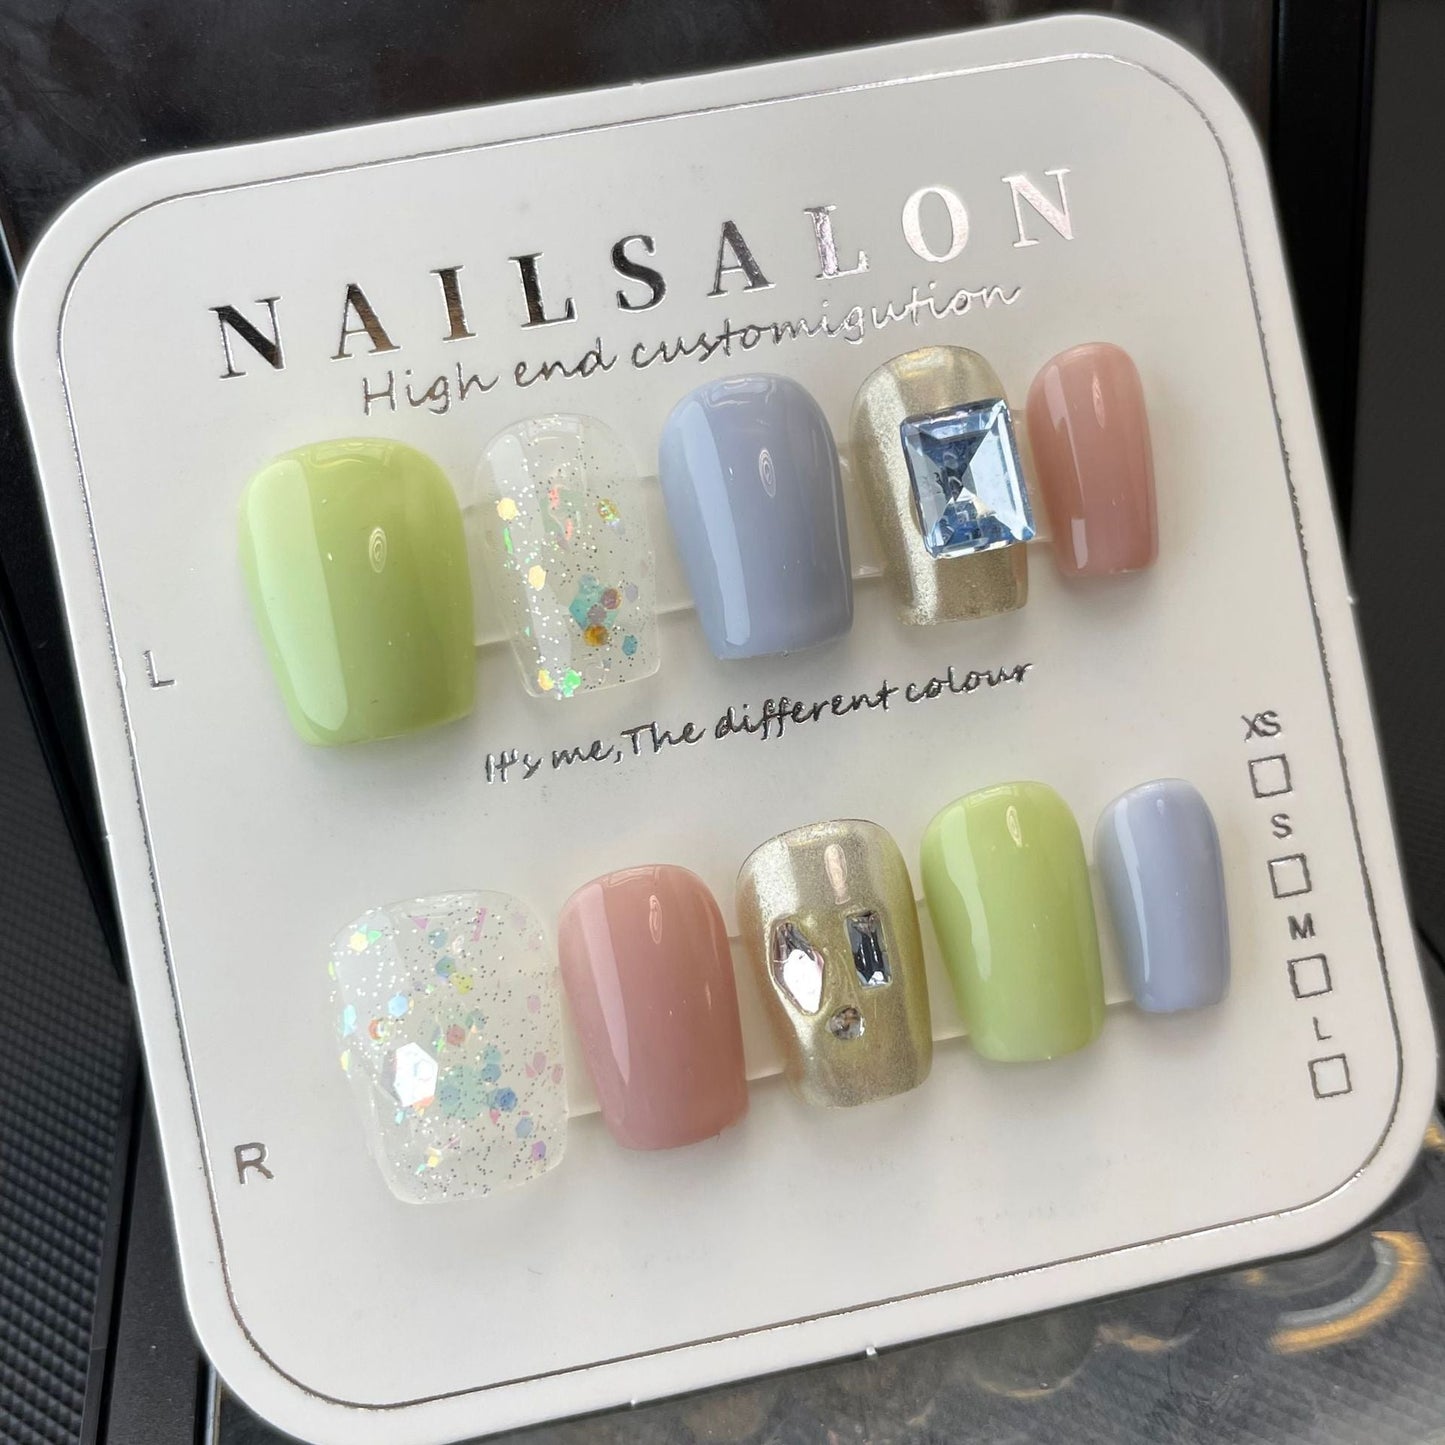 719 young girl style press on nails 100% handmade false nails mixed color